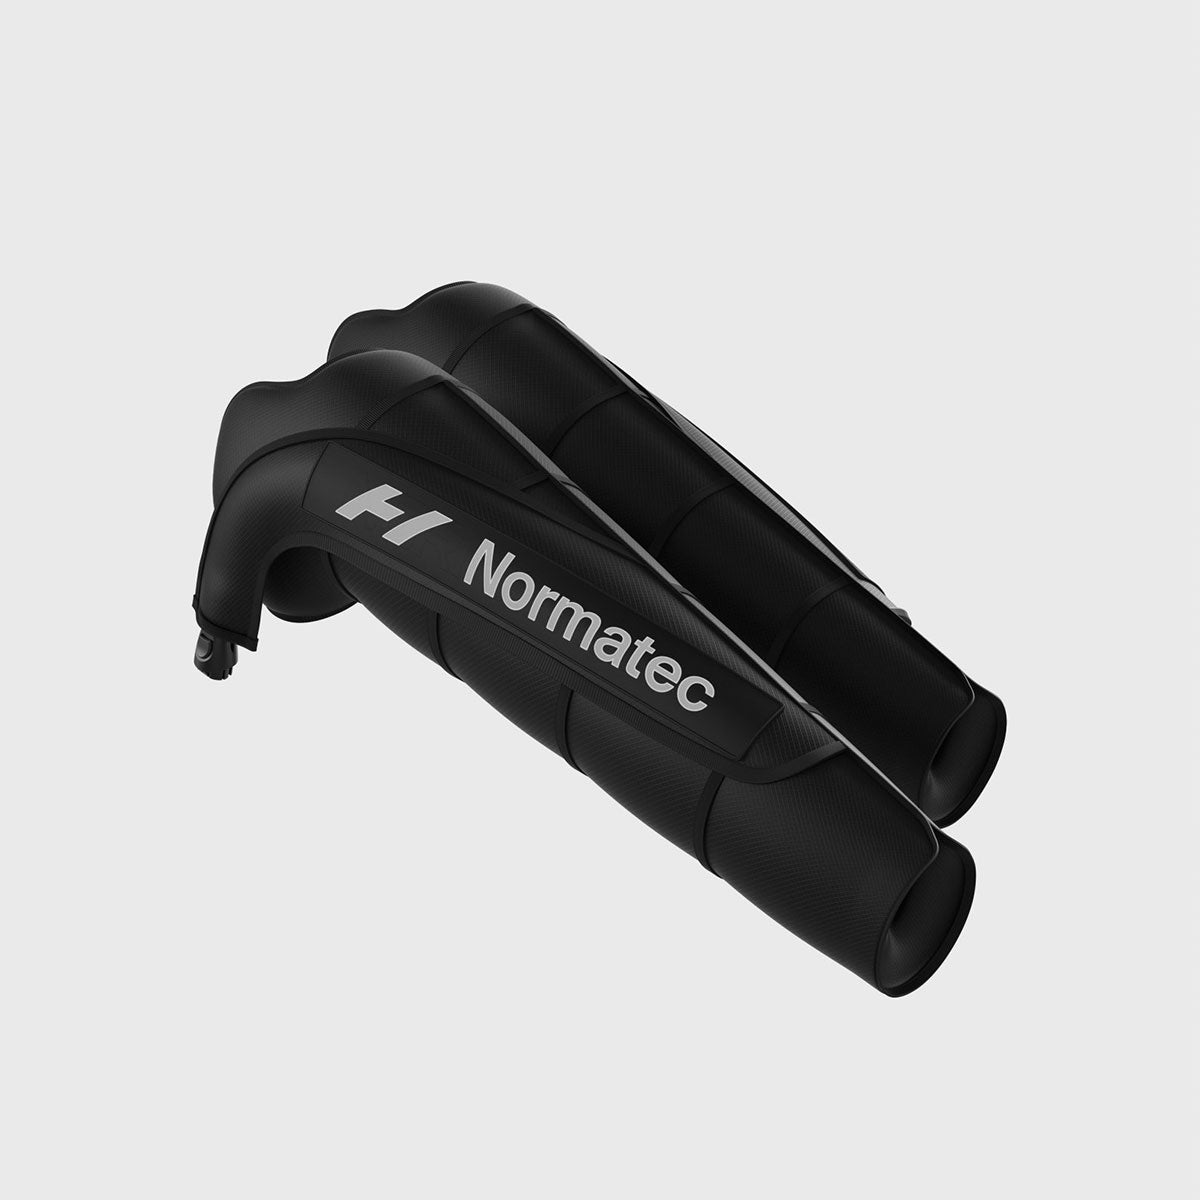 Hyperice Normatec 3 Arm Attachment (Pair) - Standard 運動恢復按摩設備 Microworks Online Store